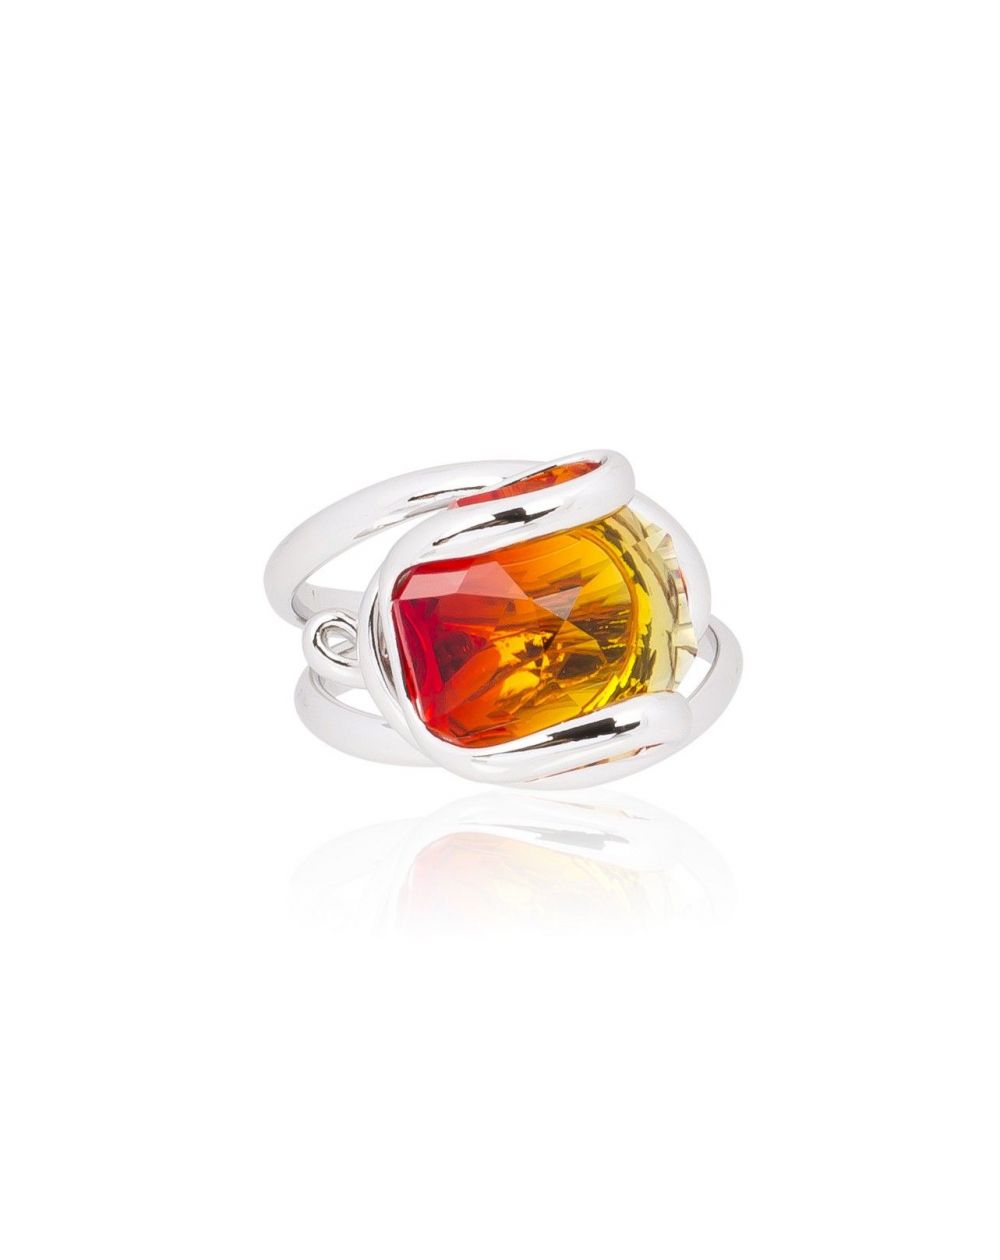 Andrea Marazzini bijoux - Bague cristal Swarovski Octagon Fire Opal